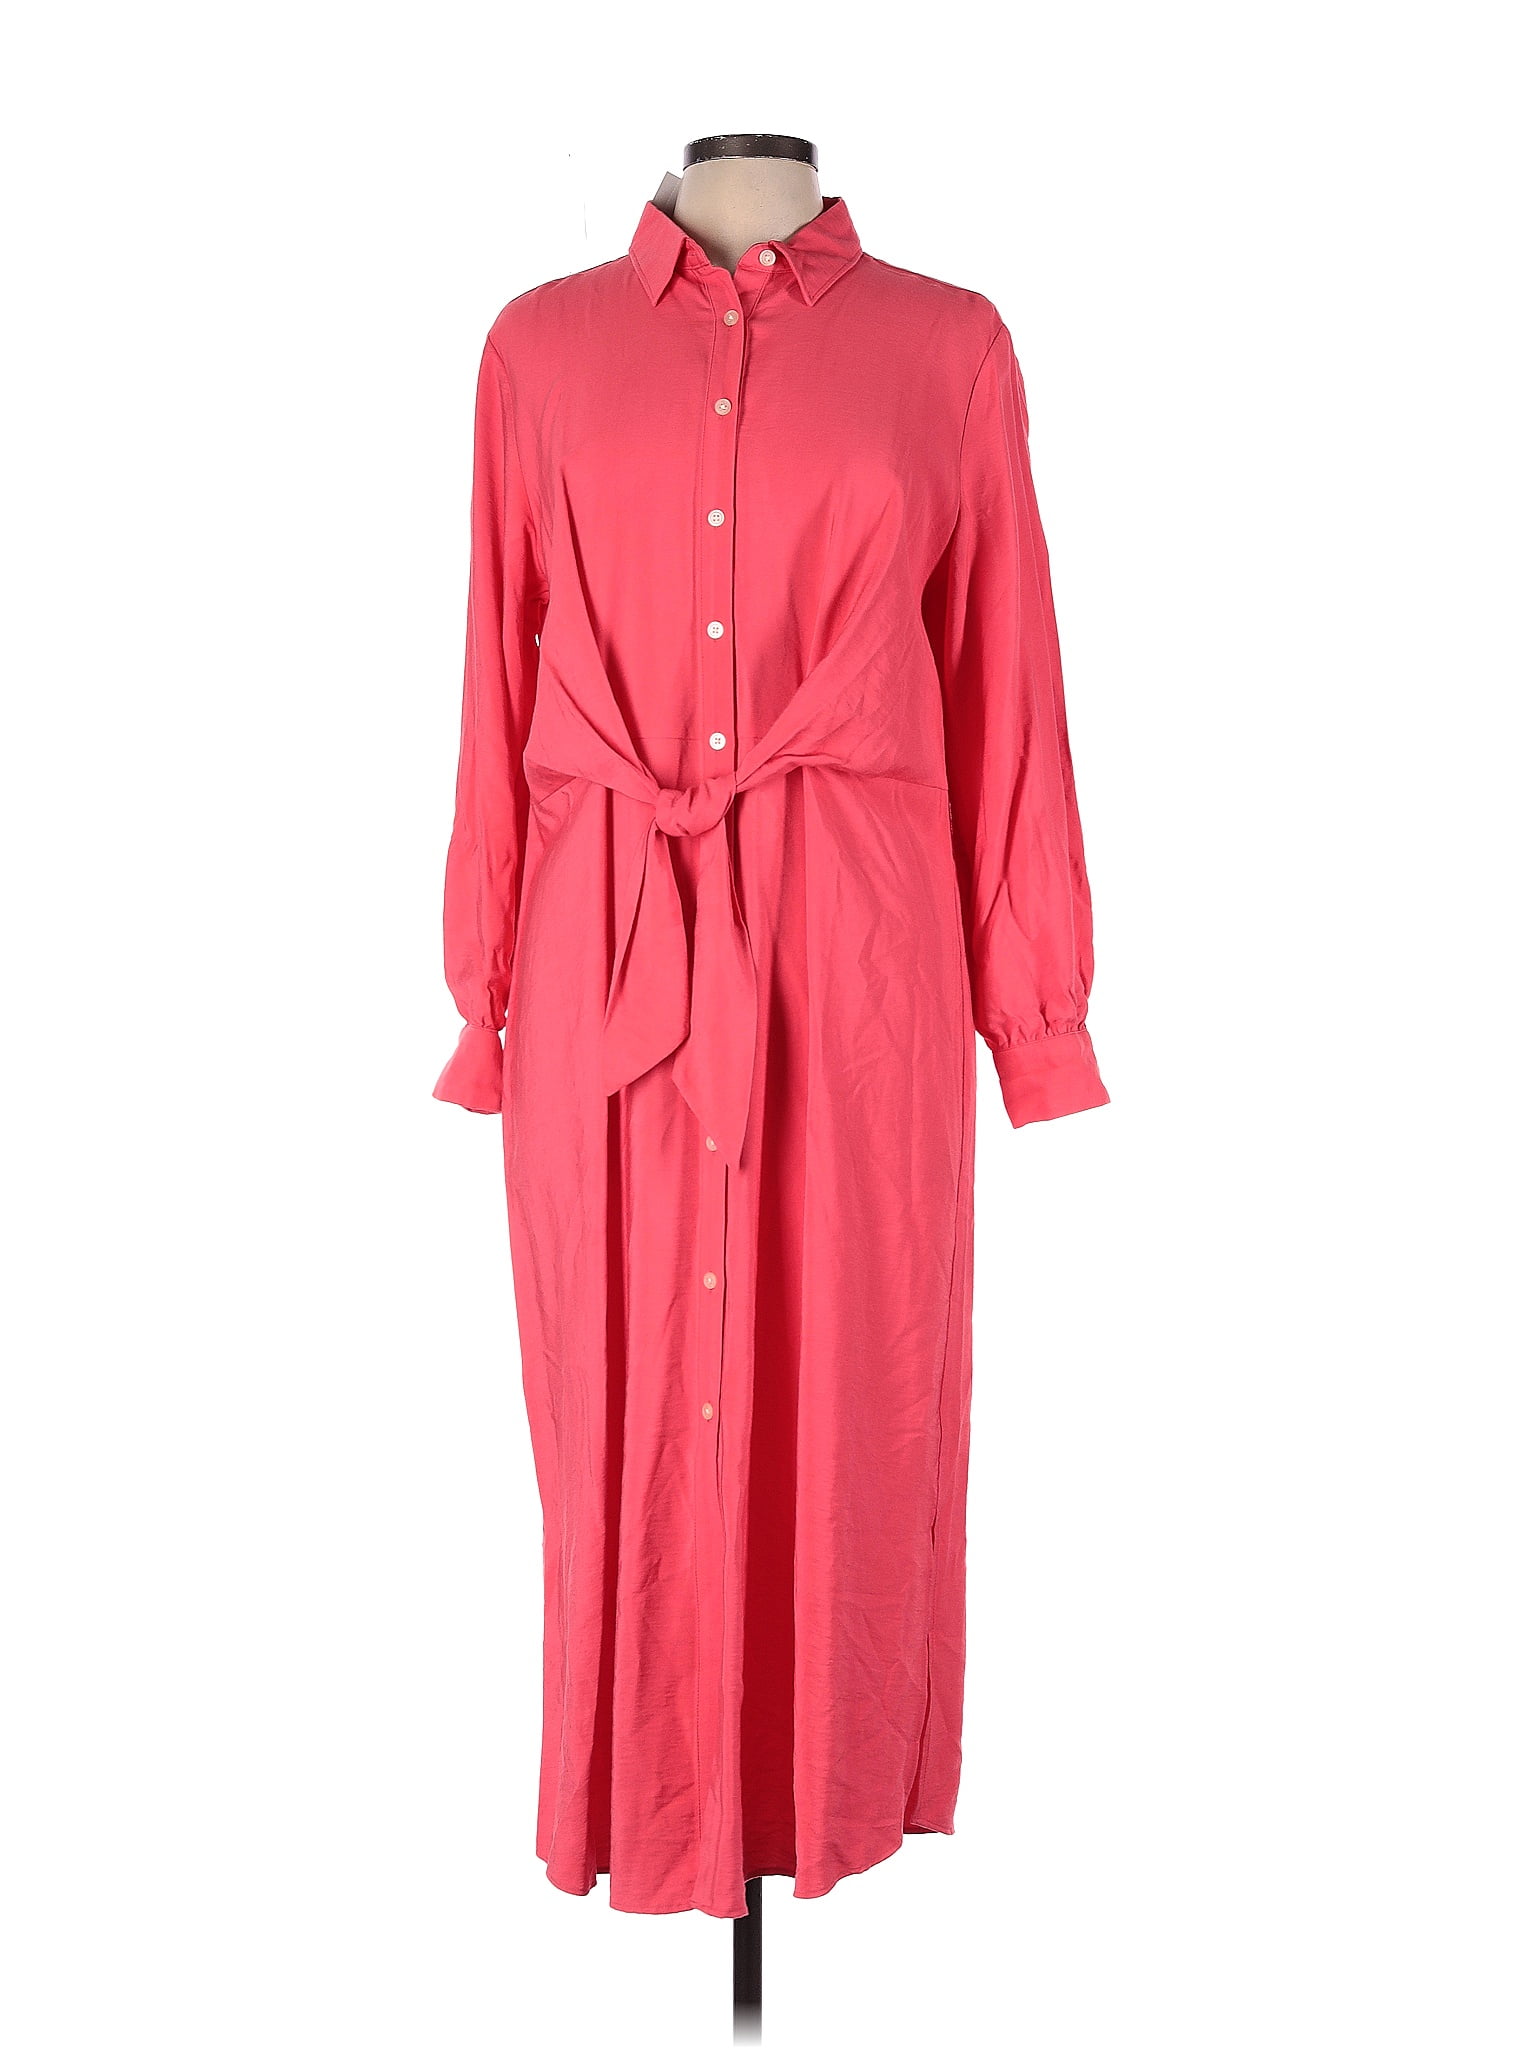 Ann Taylor LOFT Solid Pink Casual Dress Size 12 - 65% off | thredUP